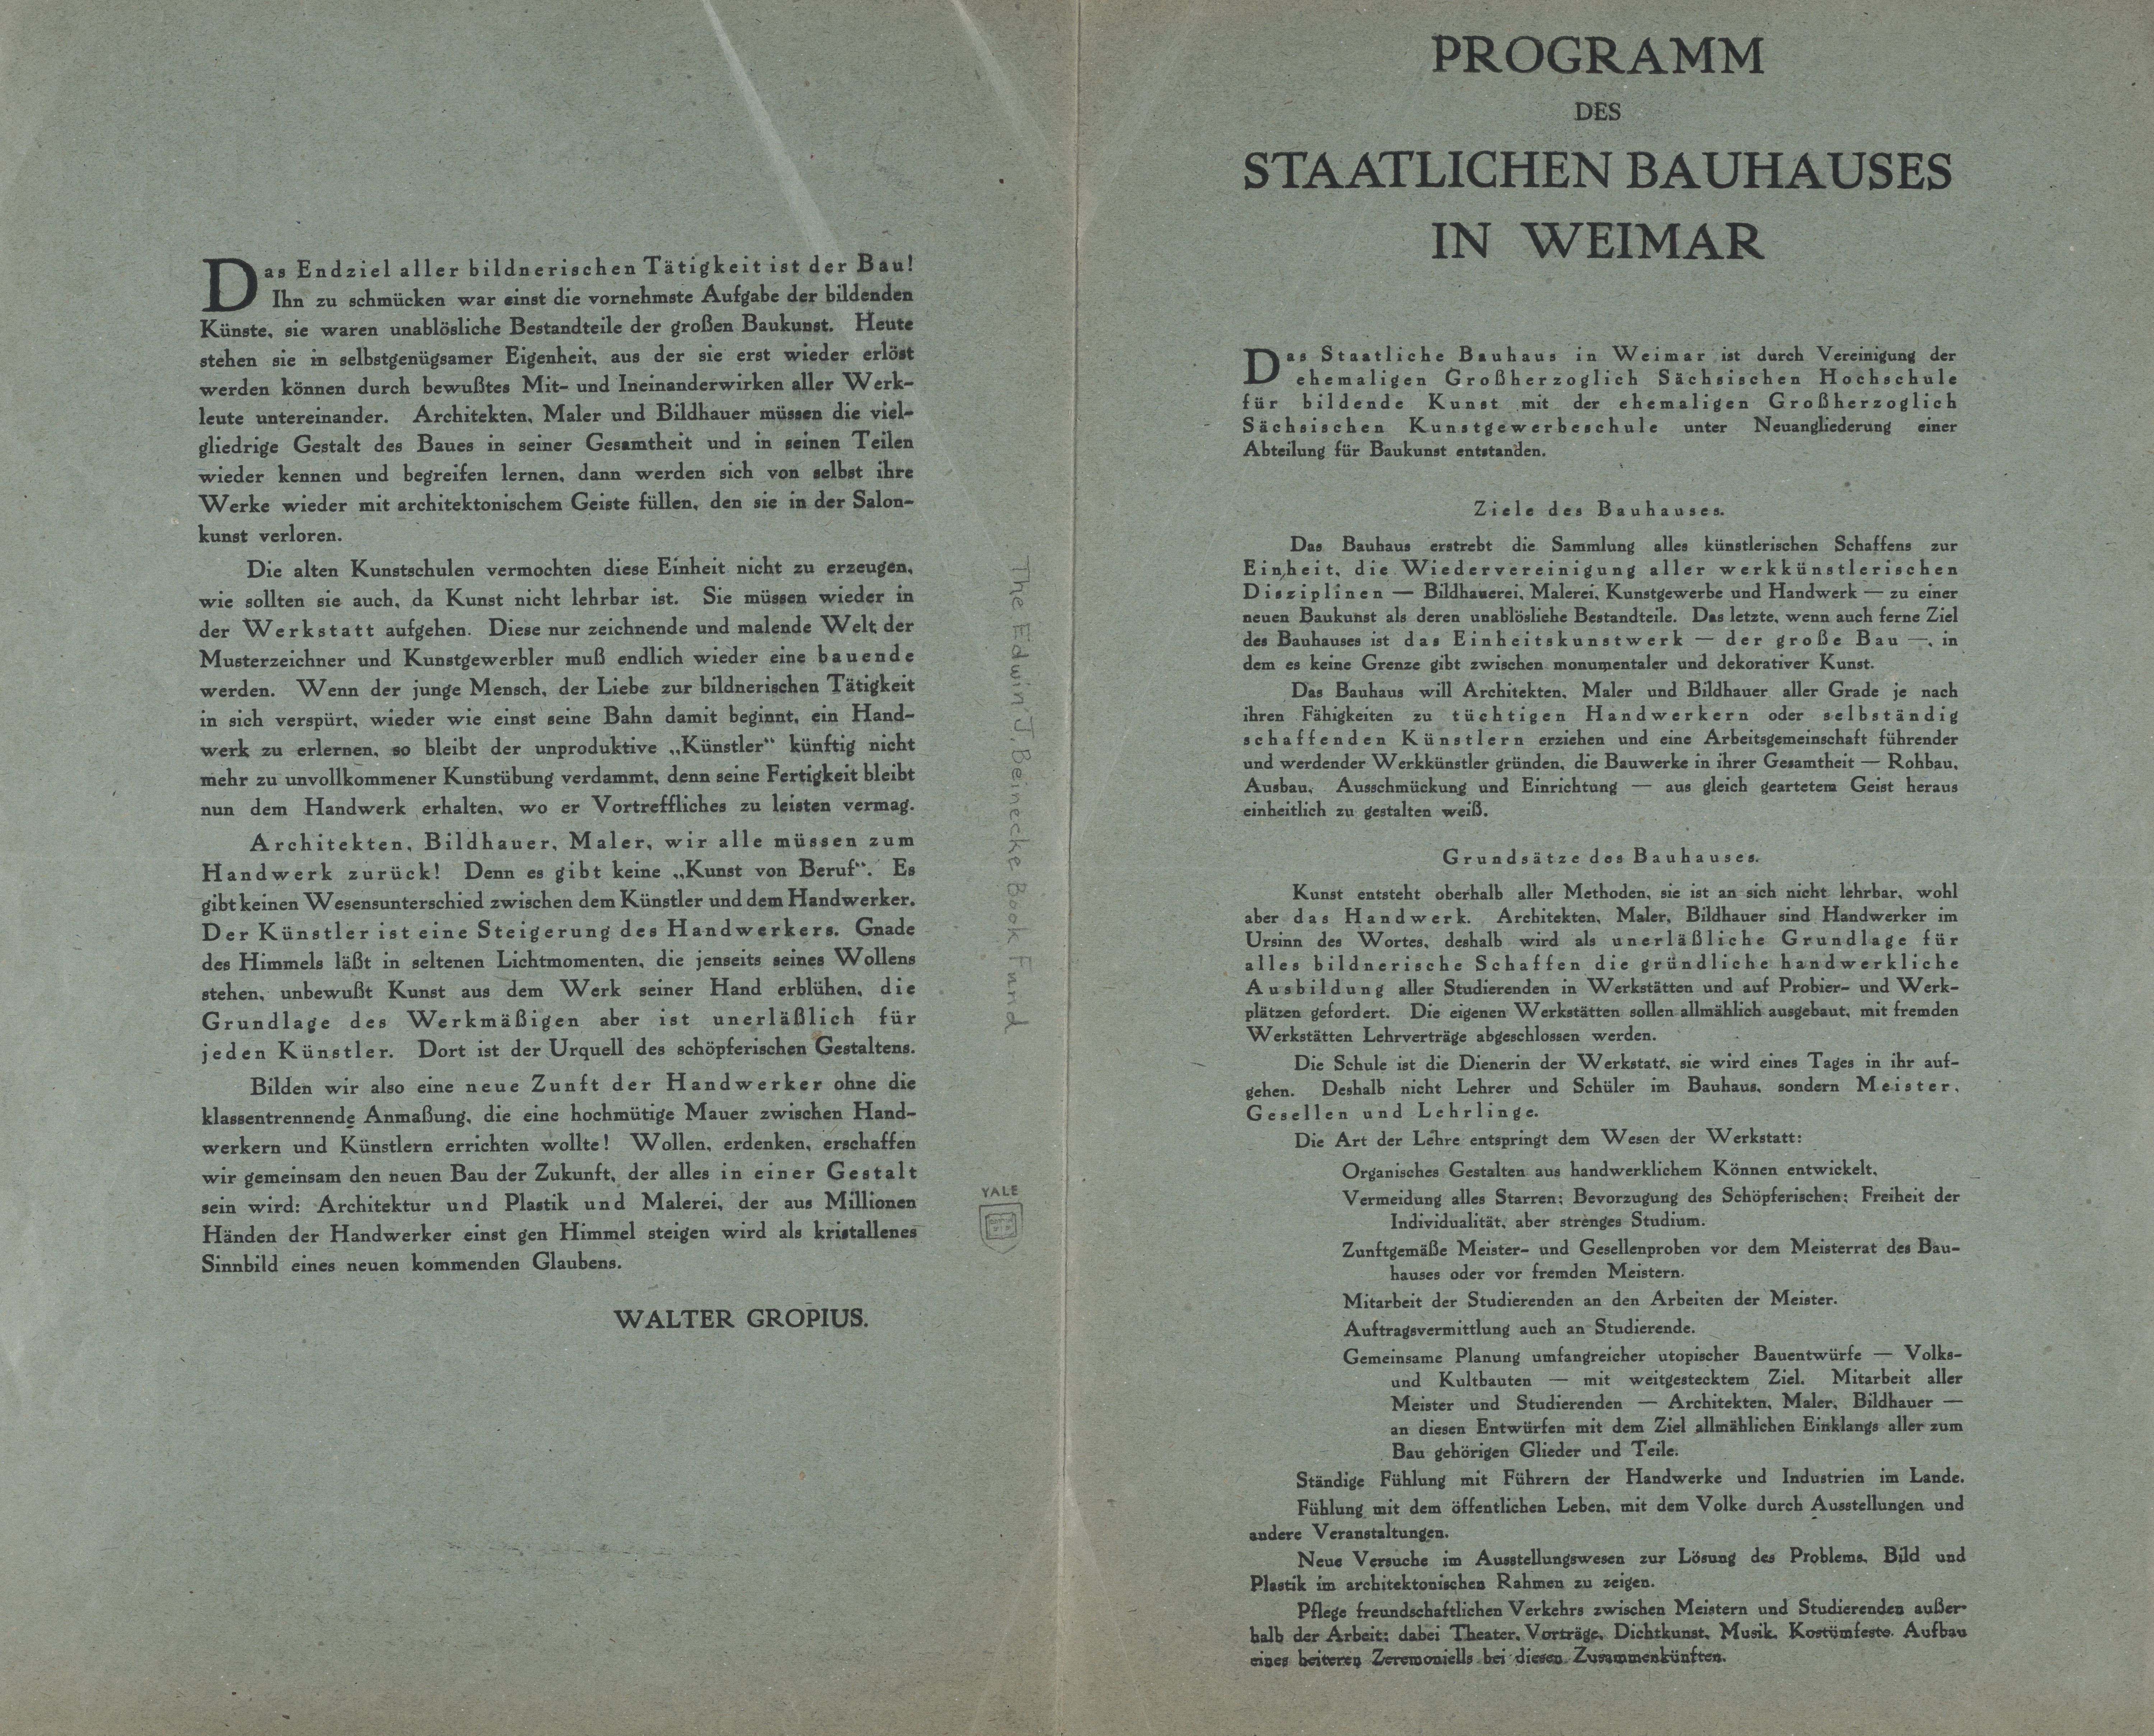 Programm des Staatlichen Bauhauses in Weimar / Walter Gropius. — 1919